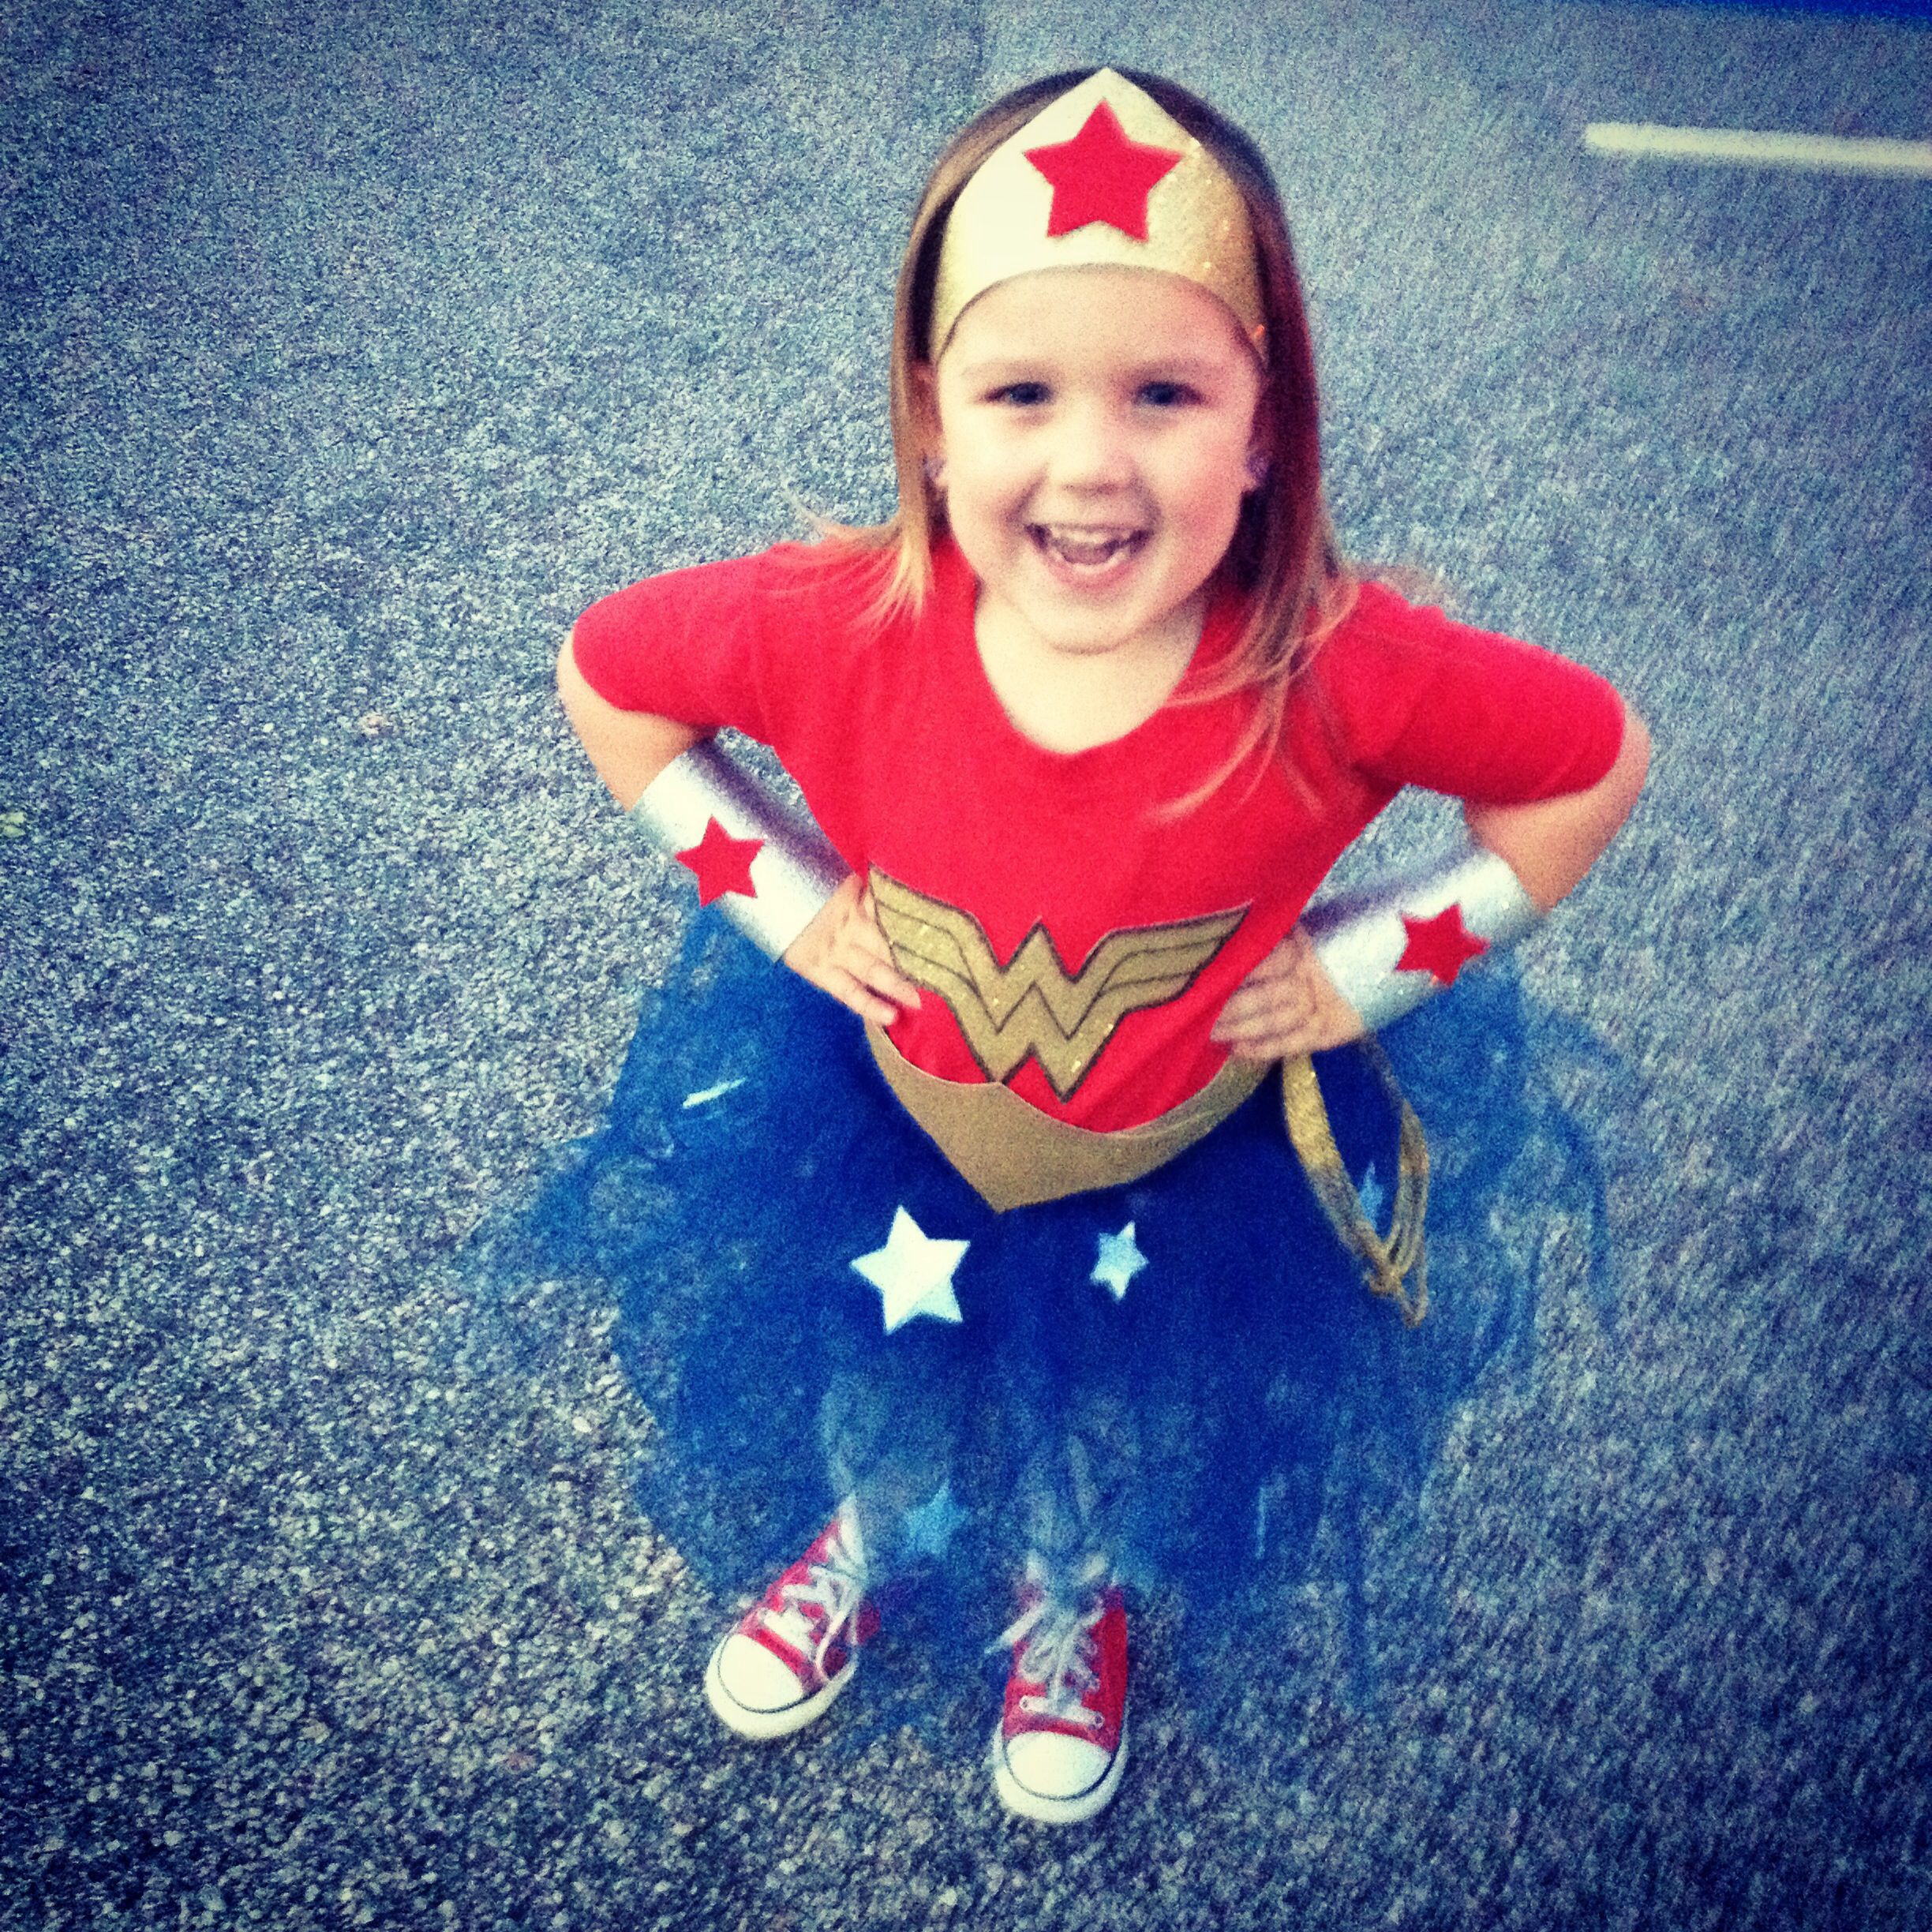 DIY Wonder Woman Costume For Kids
 DIY Wonder Woman costume for toddlers